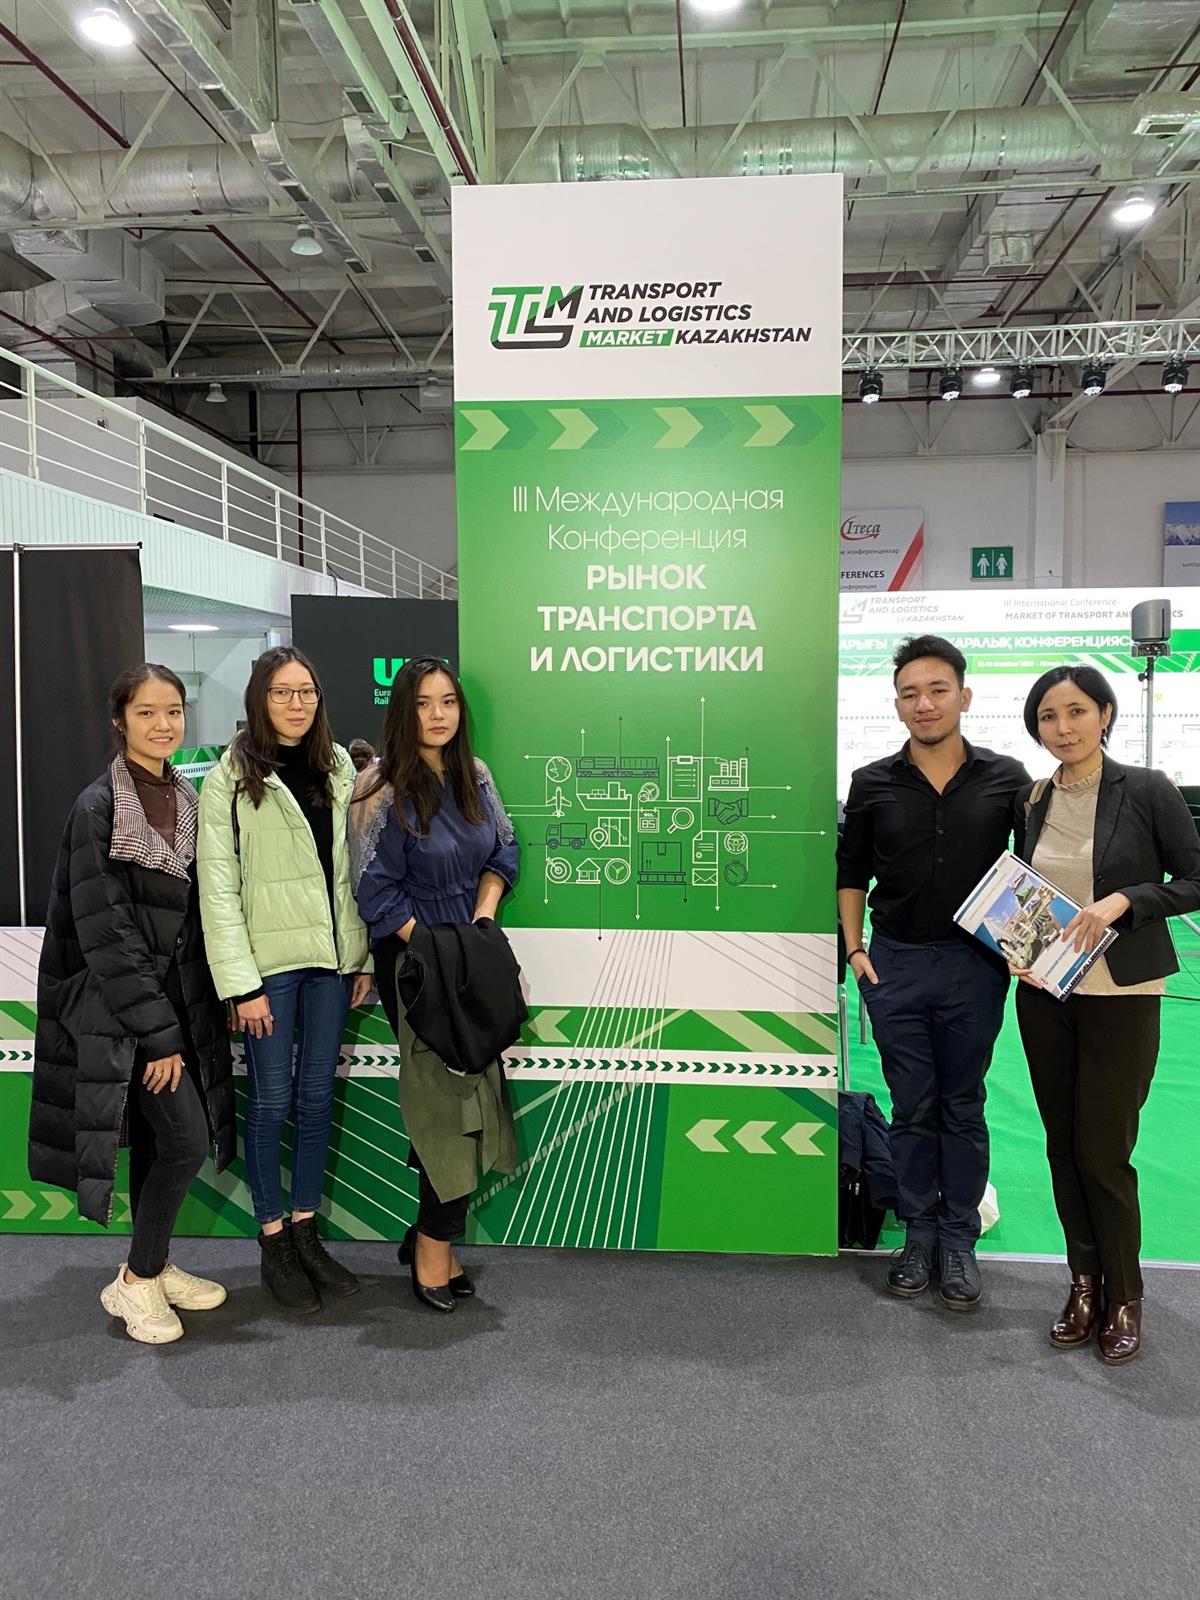  "Transport and Logistics" - TransLogistica Kazakhstan 2021